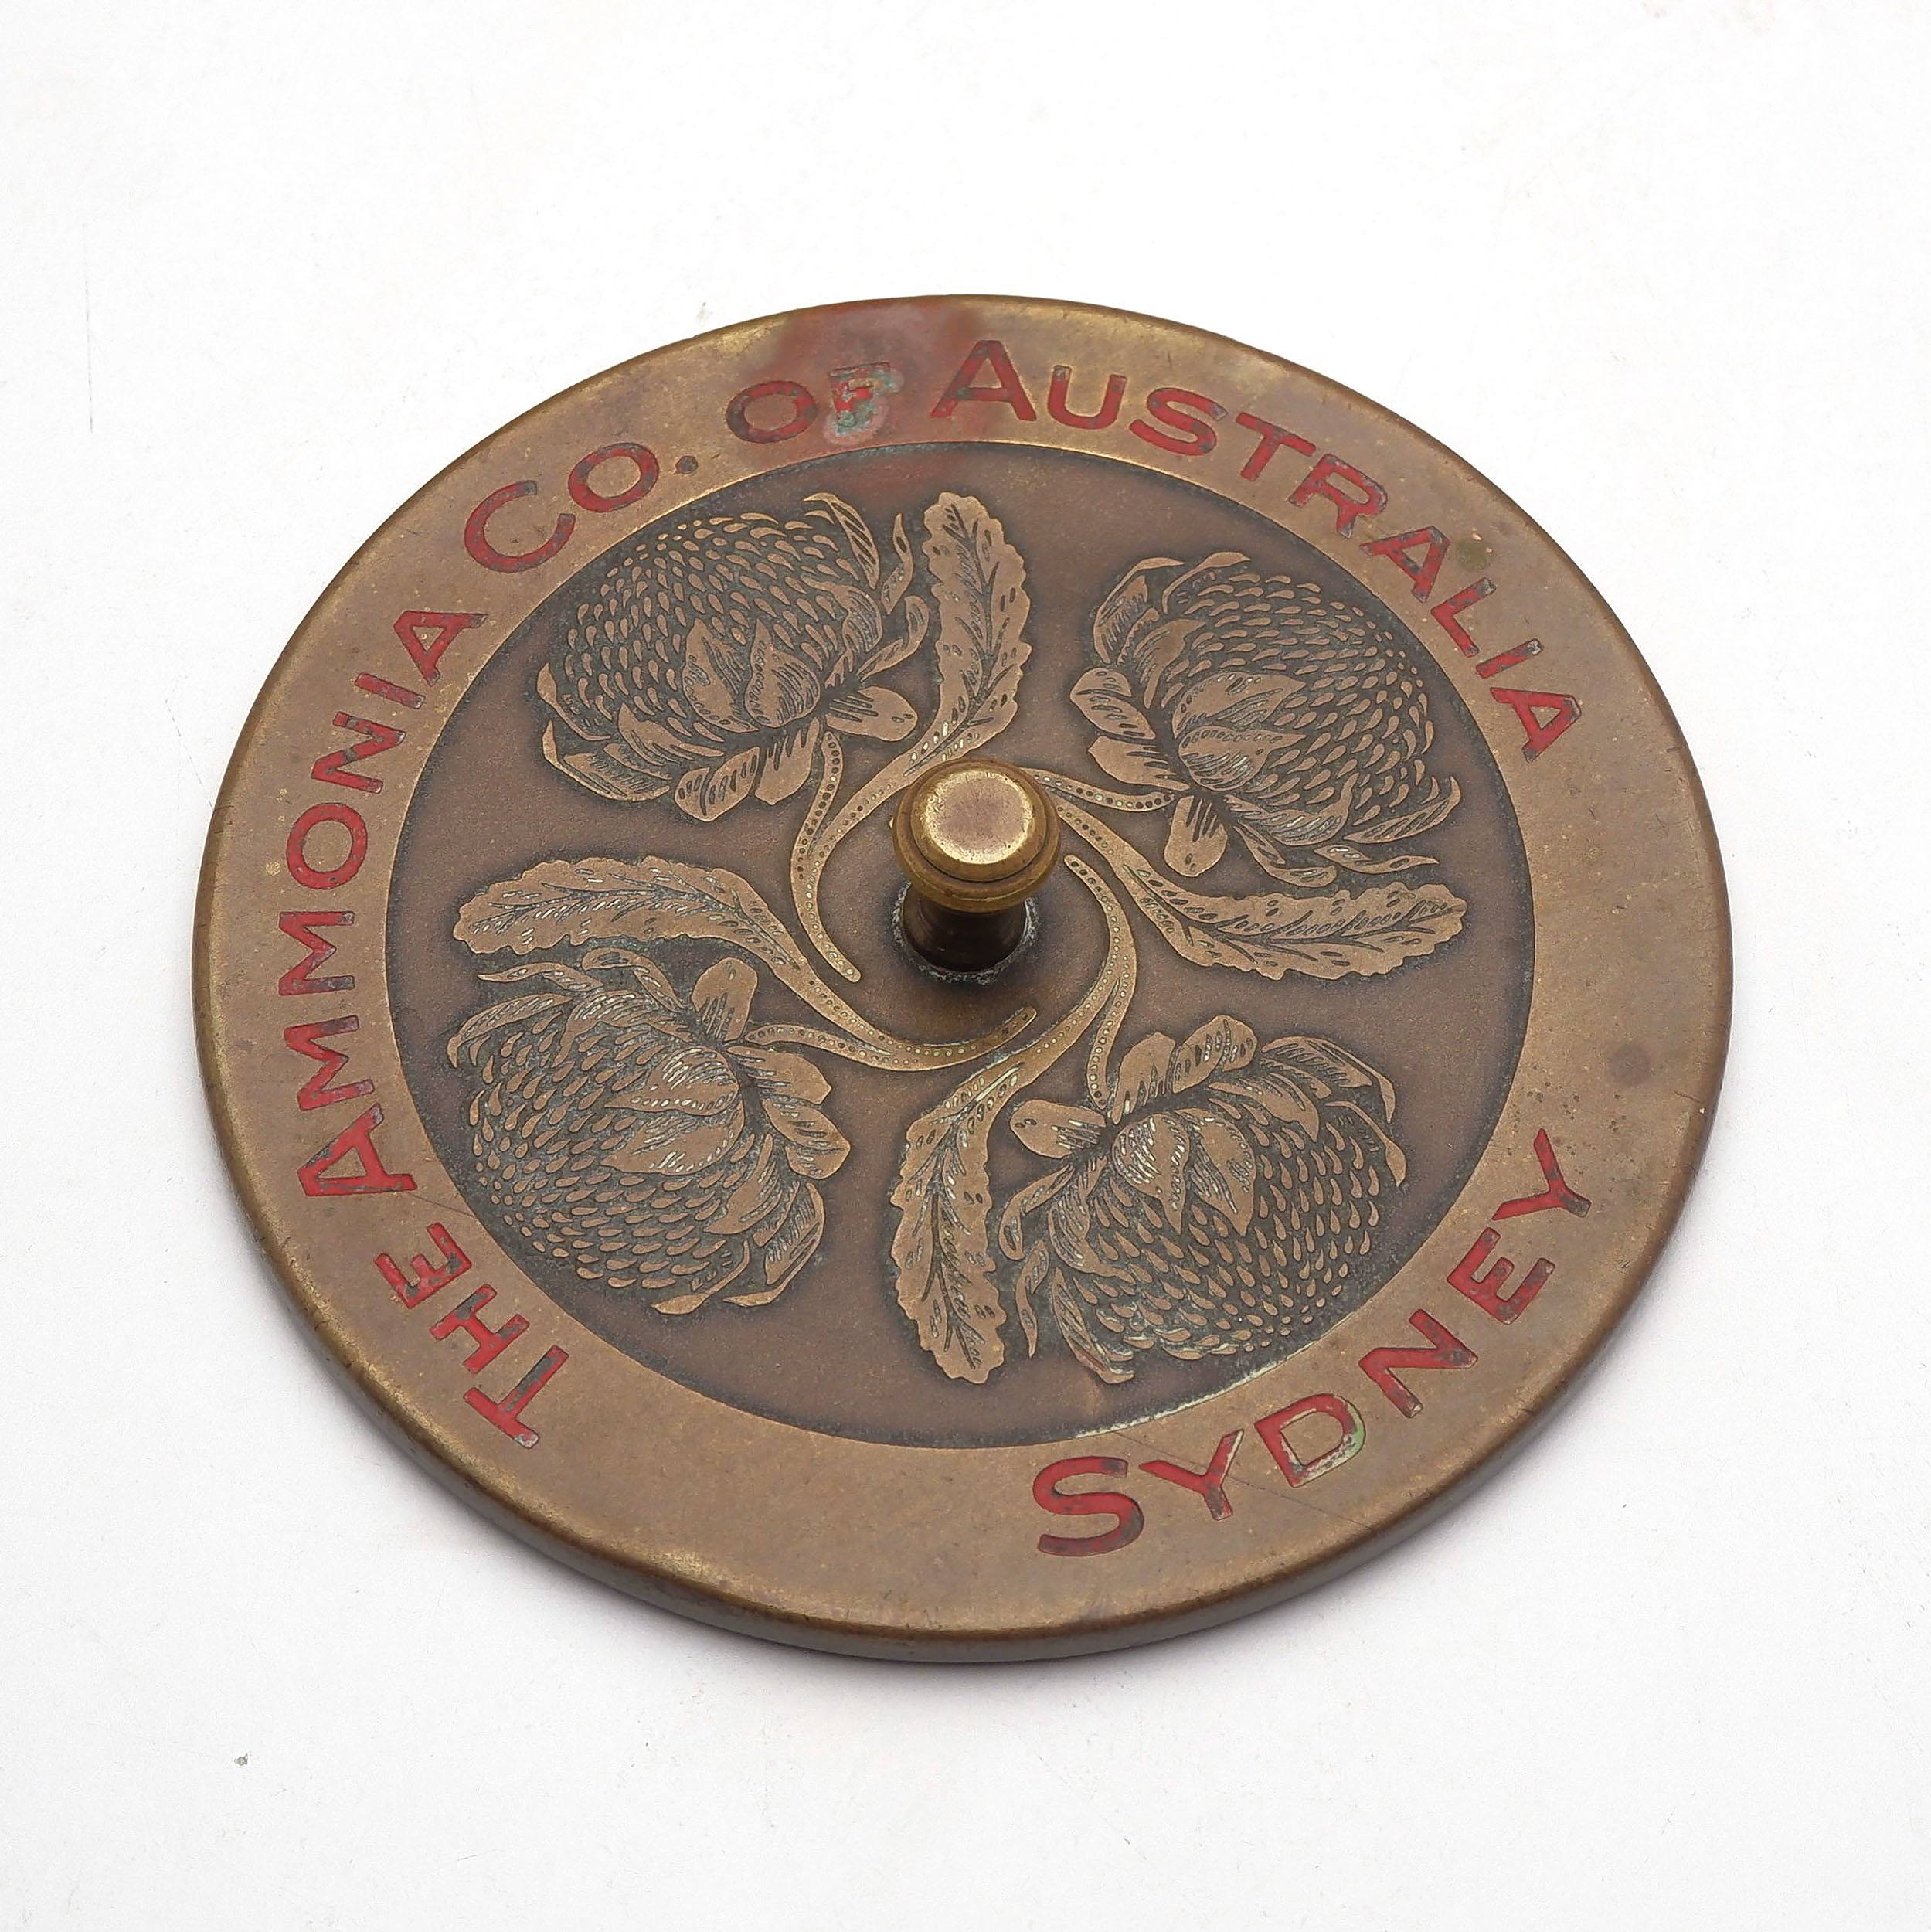 'Brass Advertising Paperweight Cast with Waratahs, The Ammonia Co Australia, Sydney'